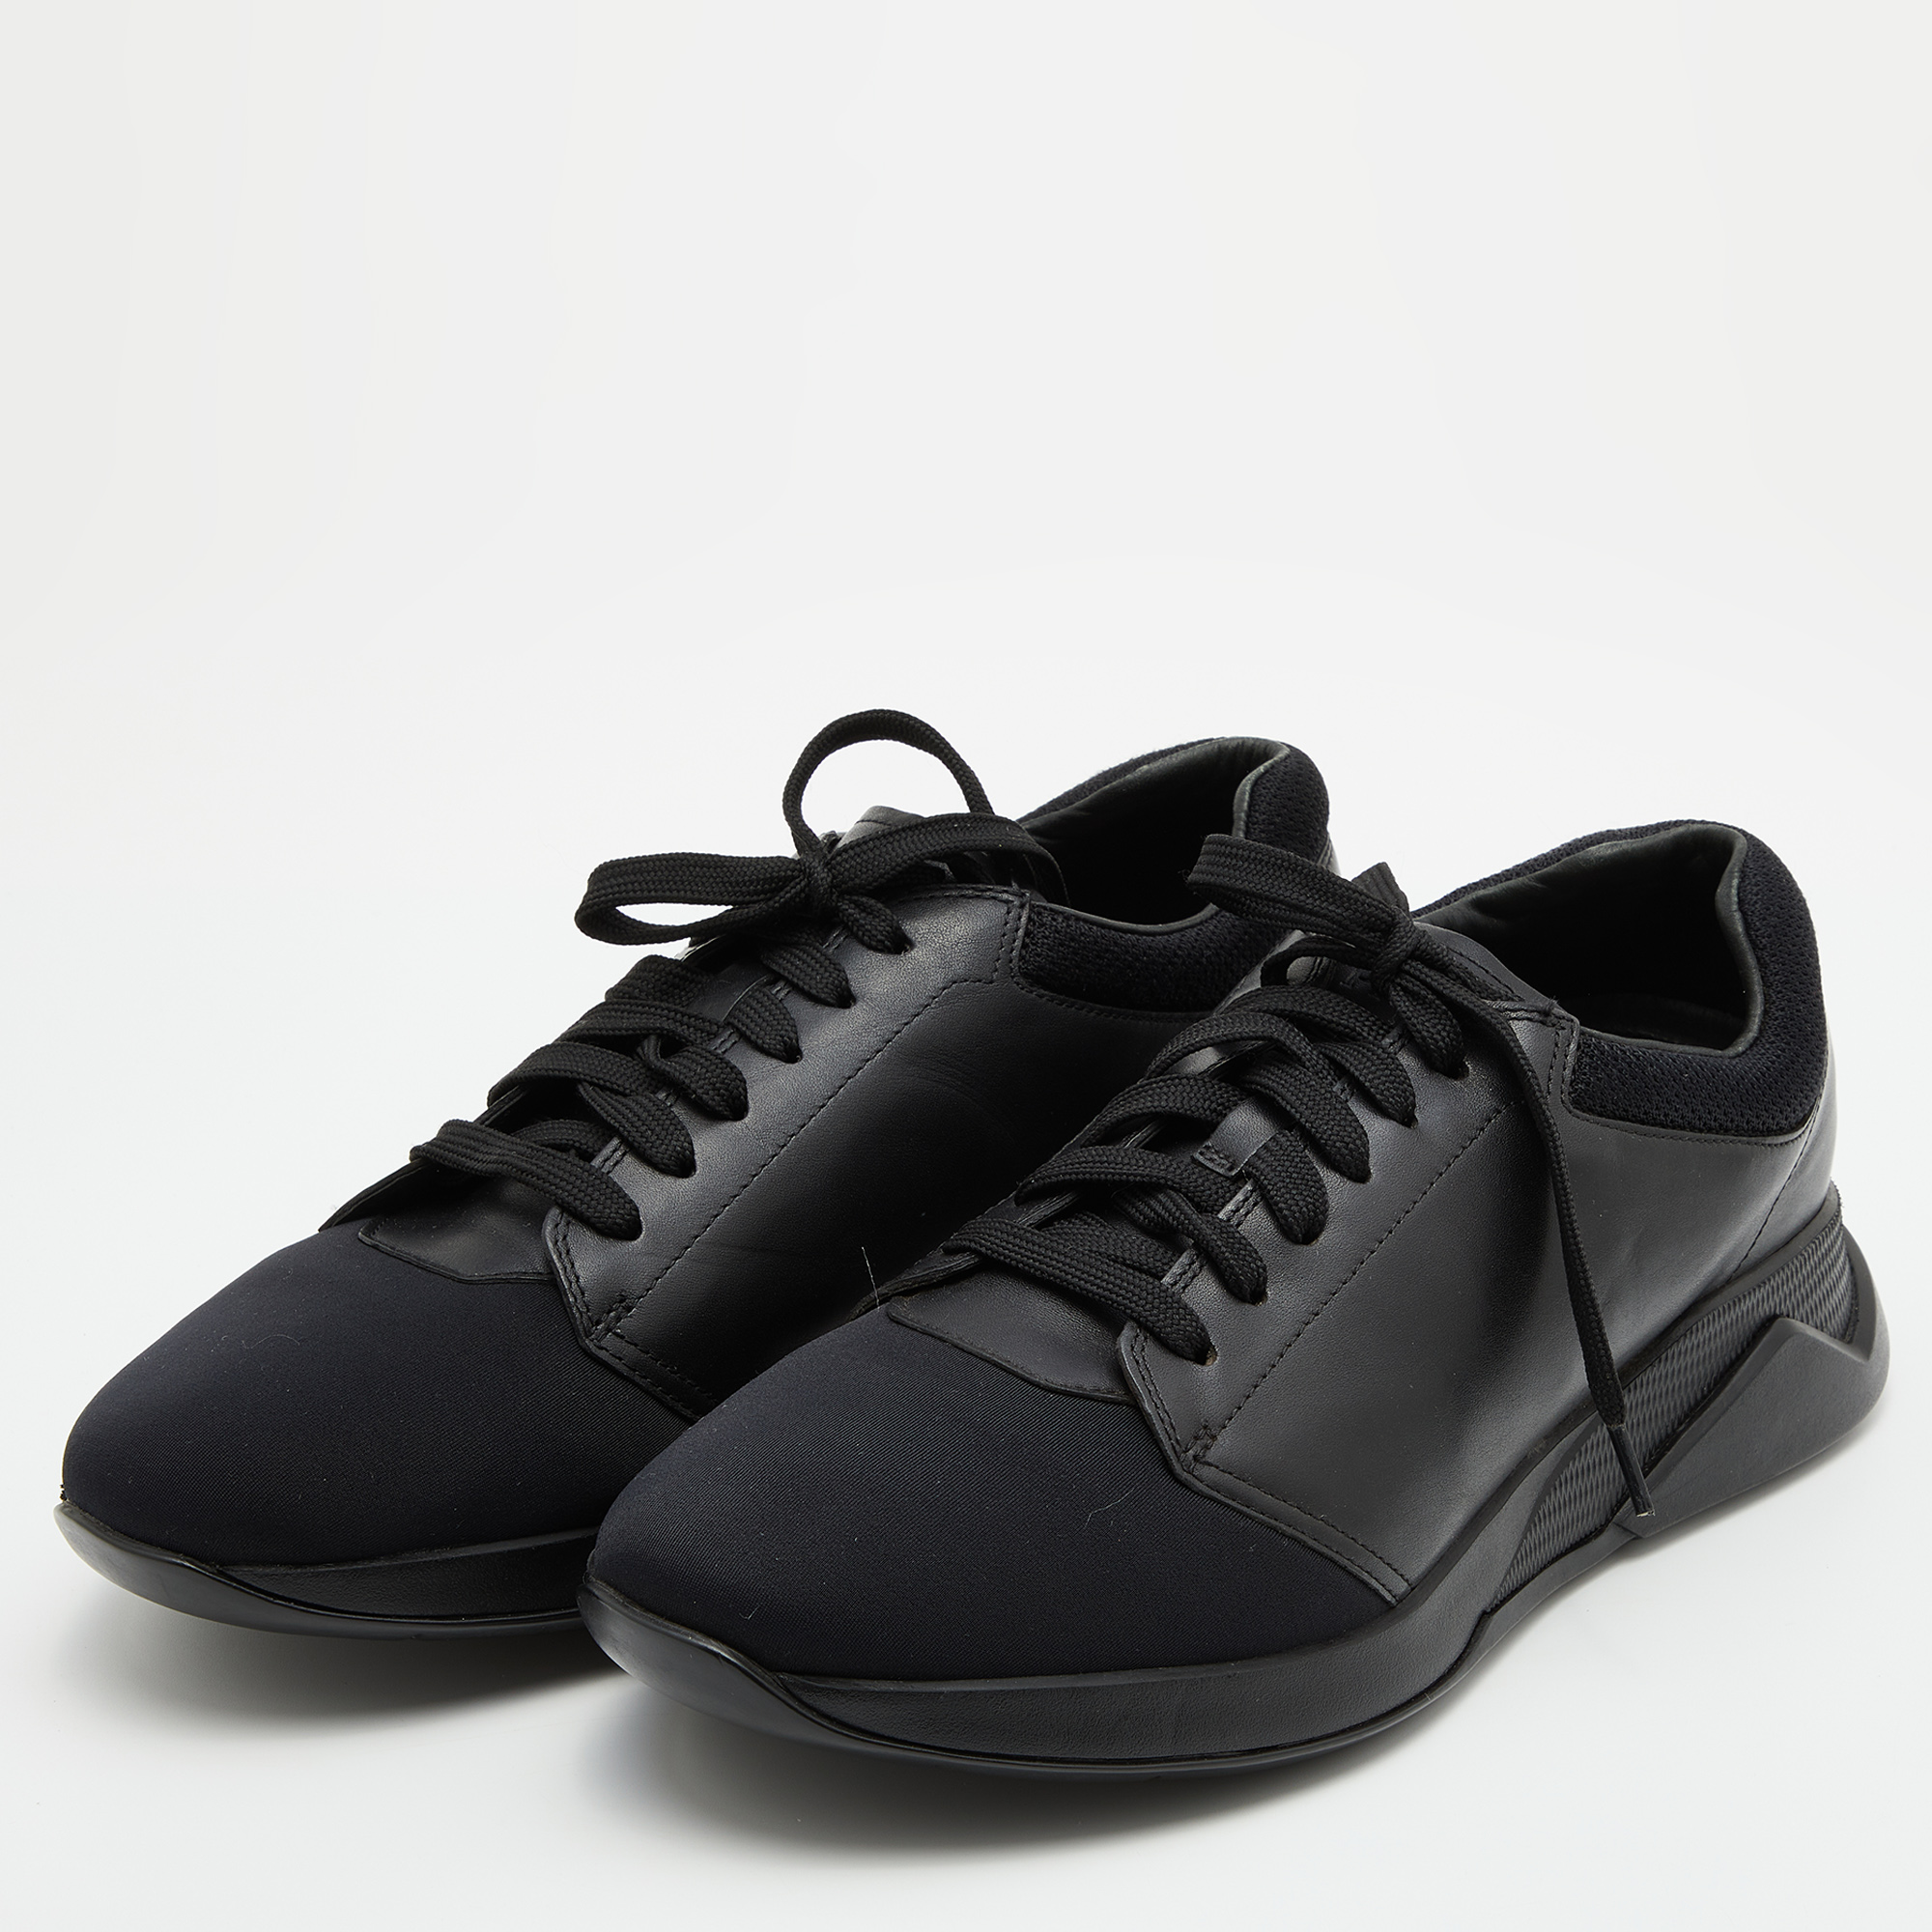 

Prada Sport Leather and Neoprene Low Top Sneakers Size, Black